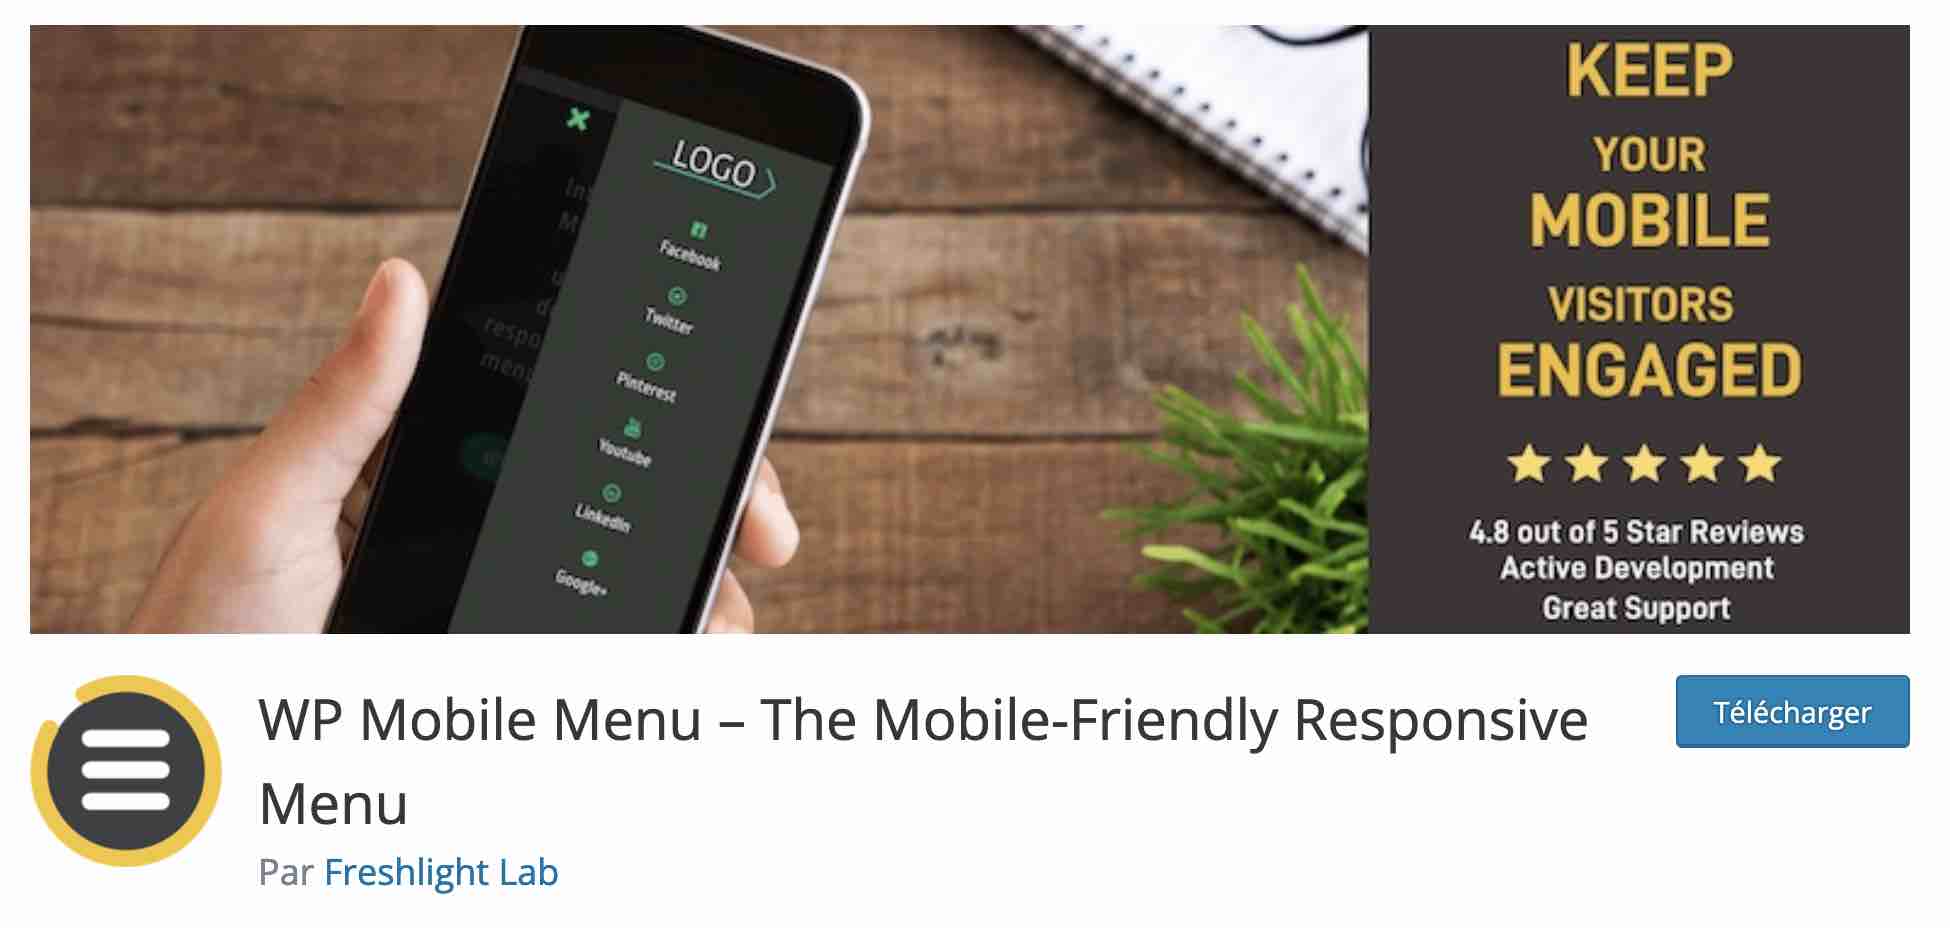 WP Mobile Menu allows you to create a responsive menu.